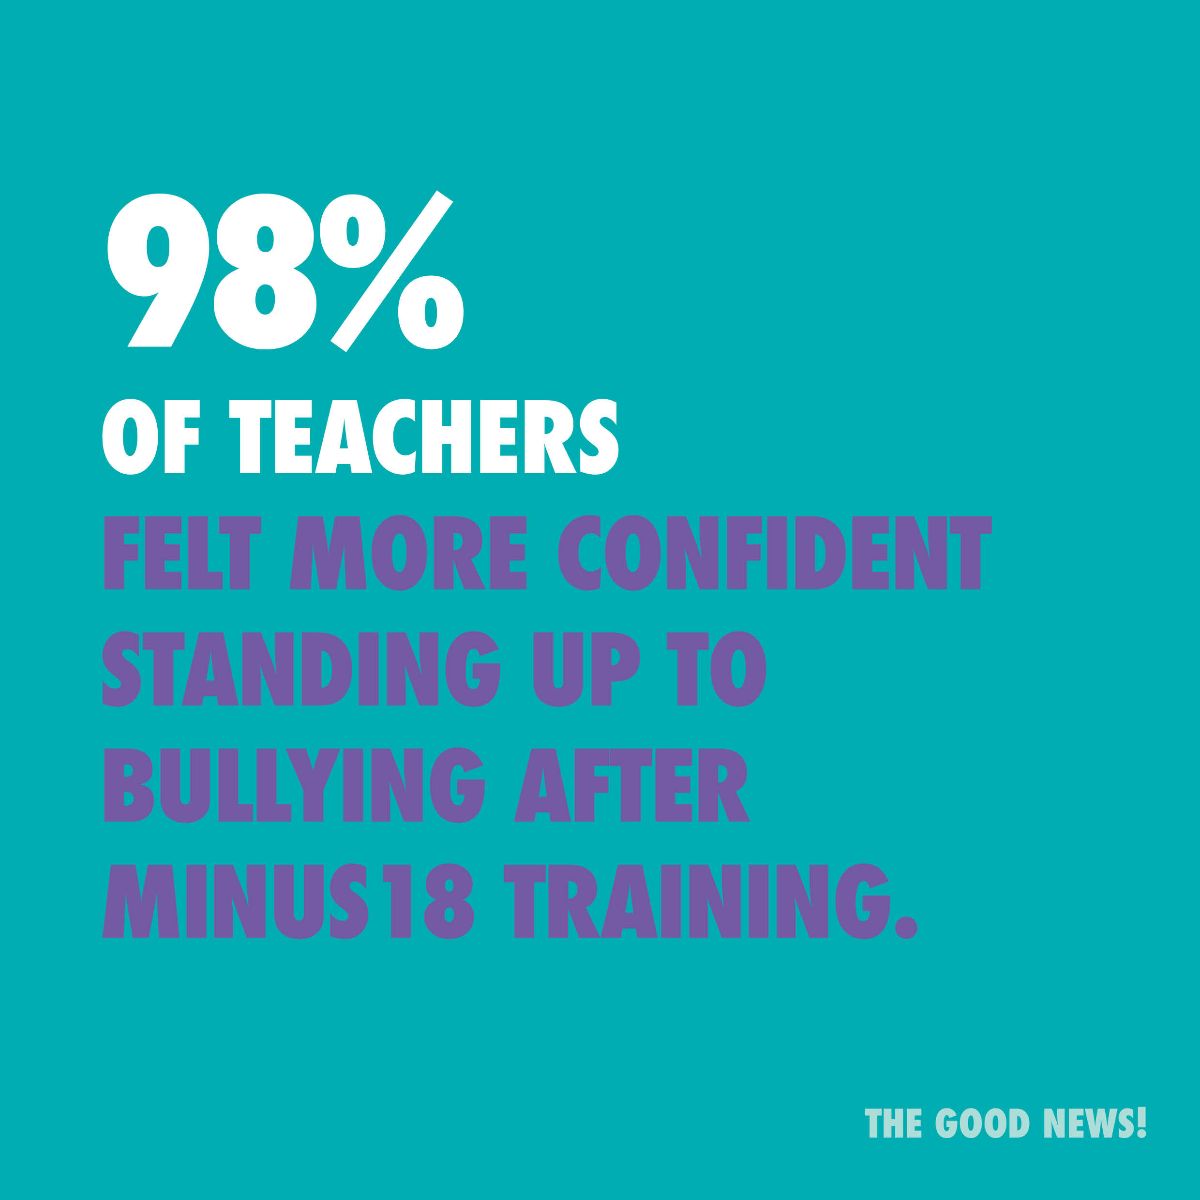 Teachers felt more confident after training